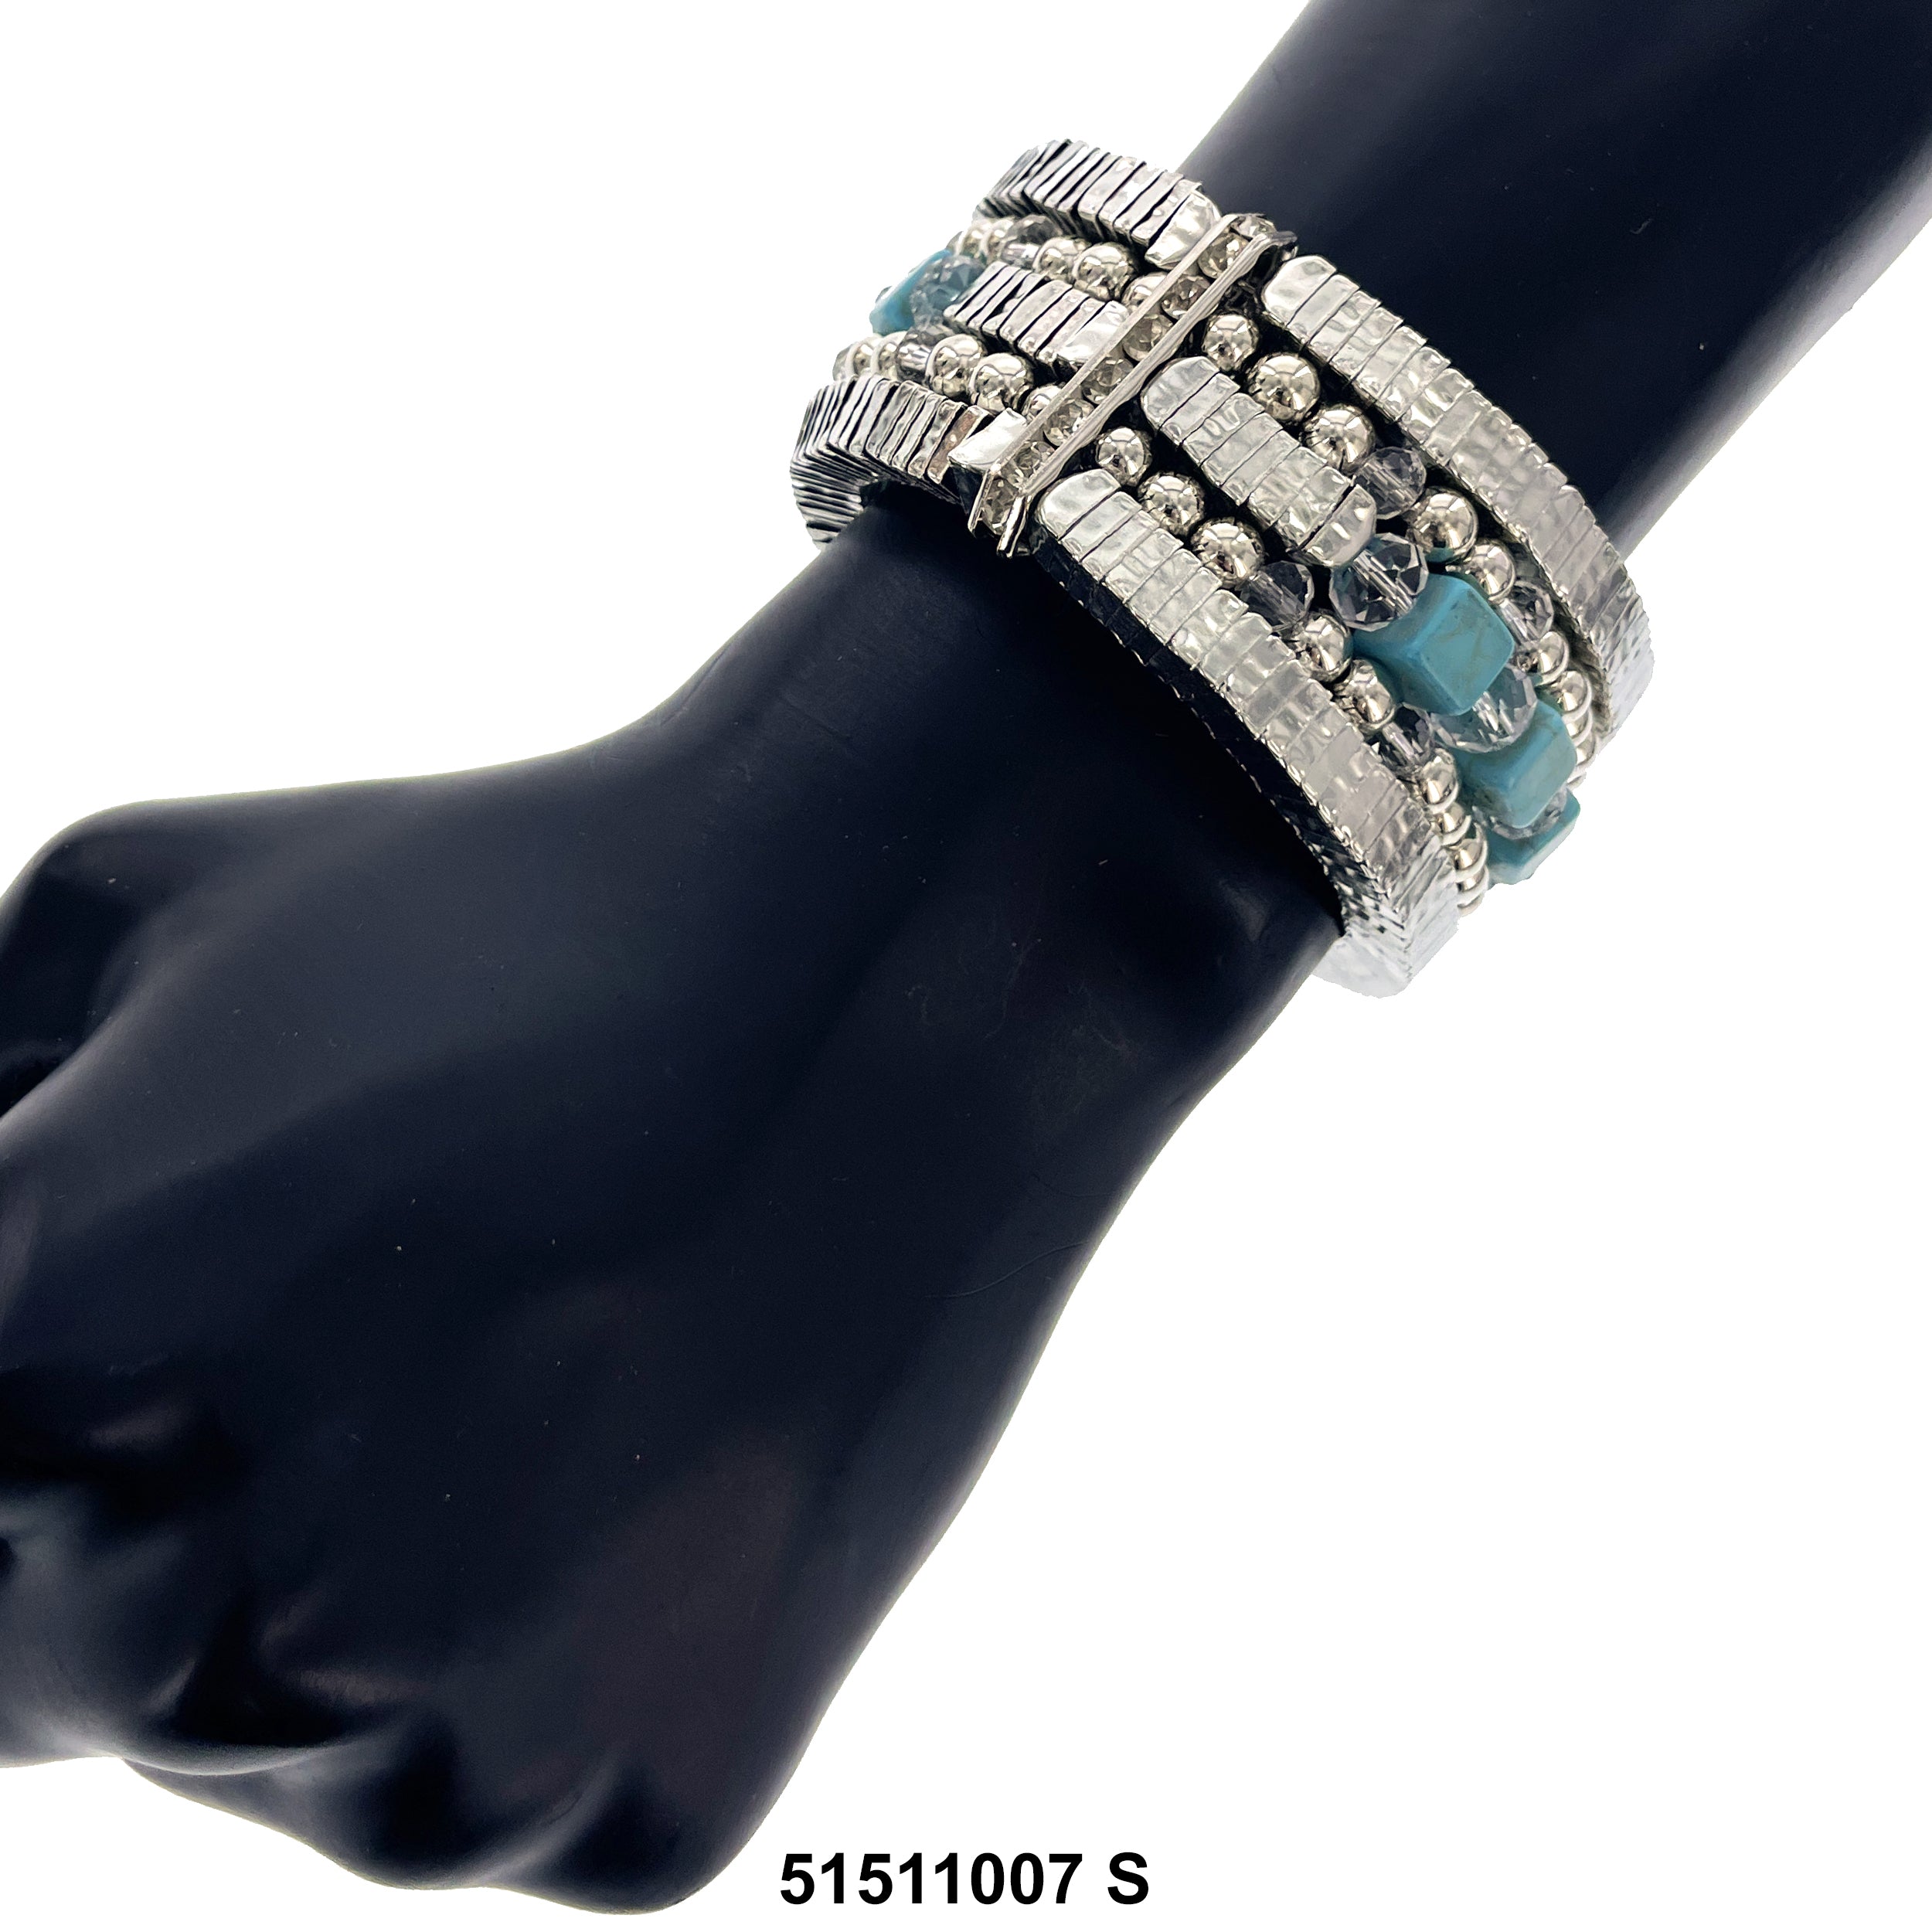 Cuff Bangle Bracelet 51511007 S